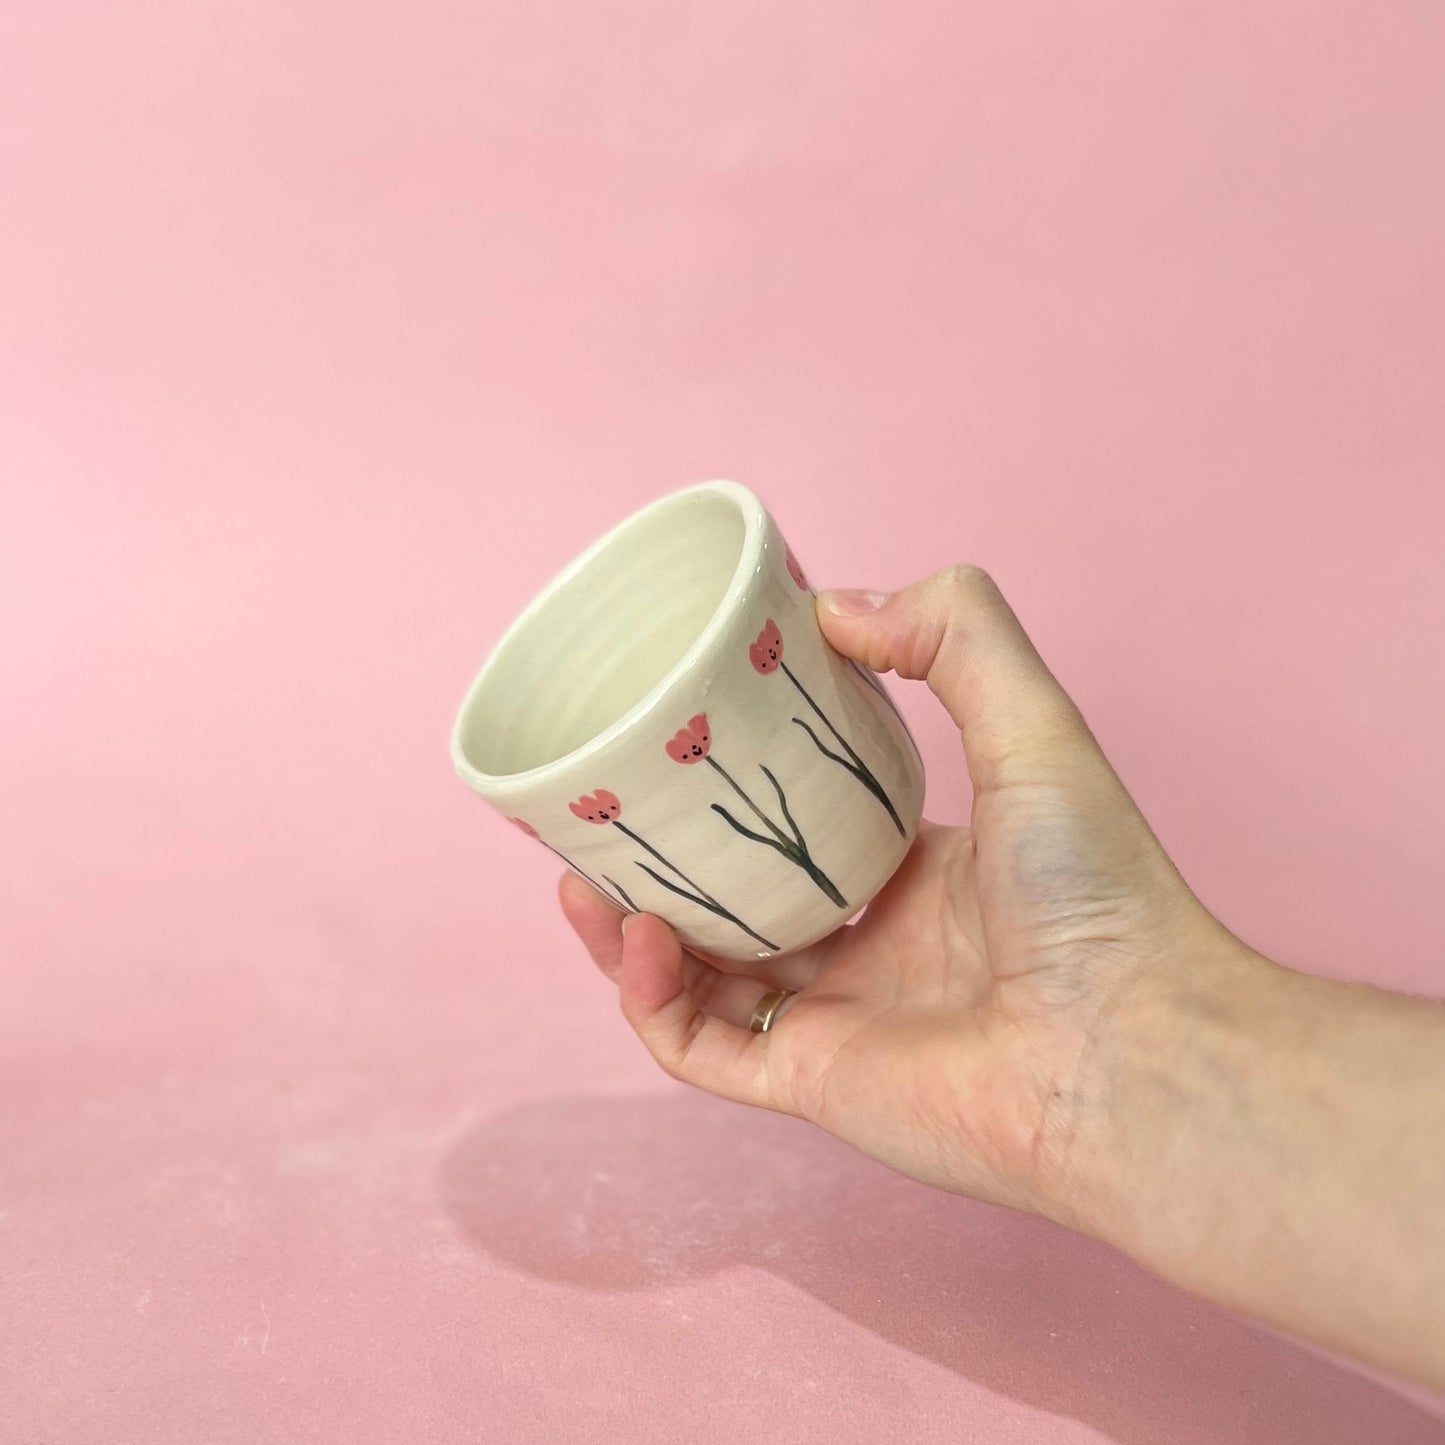 Tulip Latte Cup